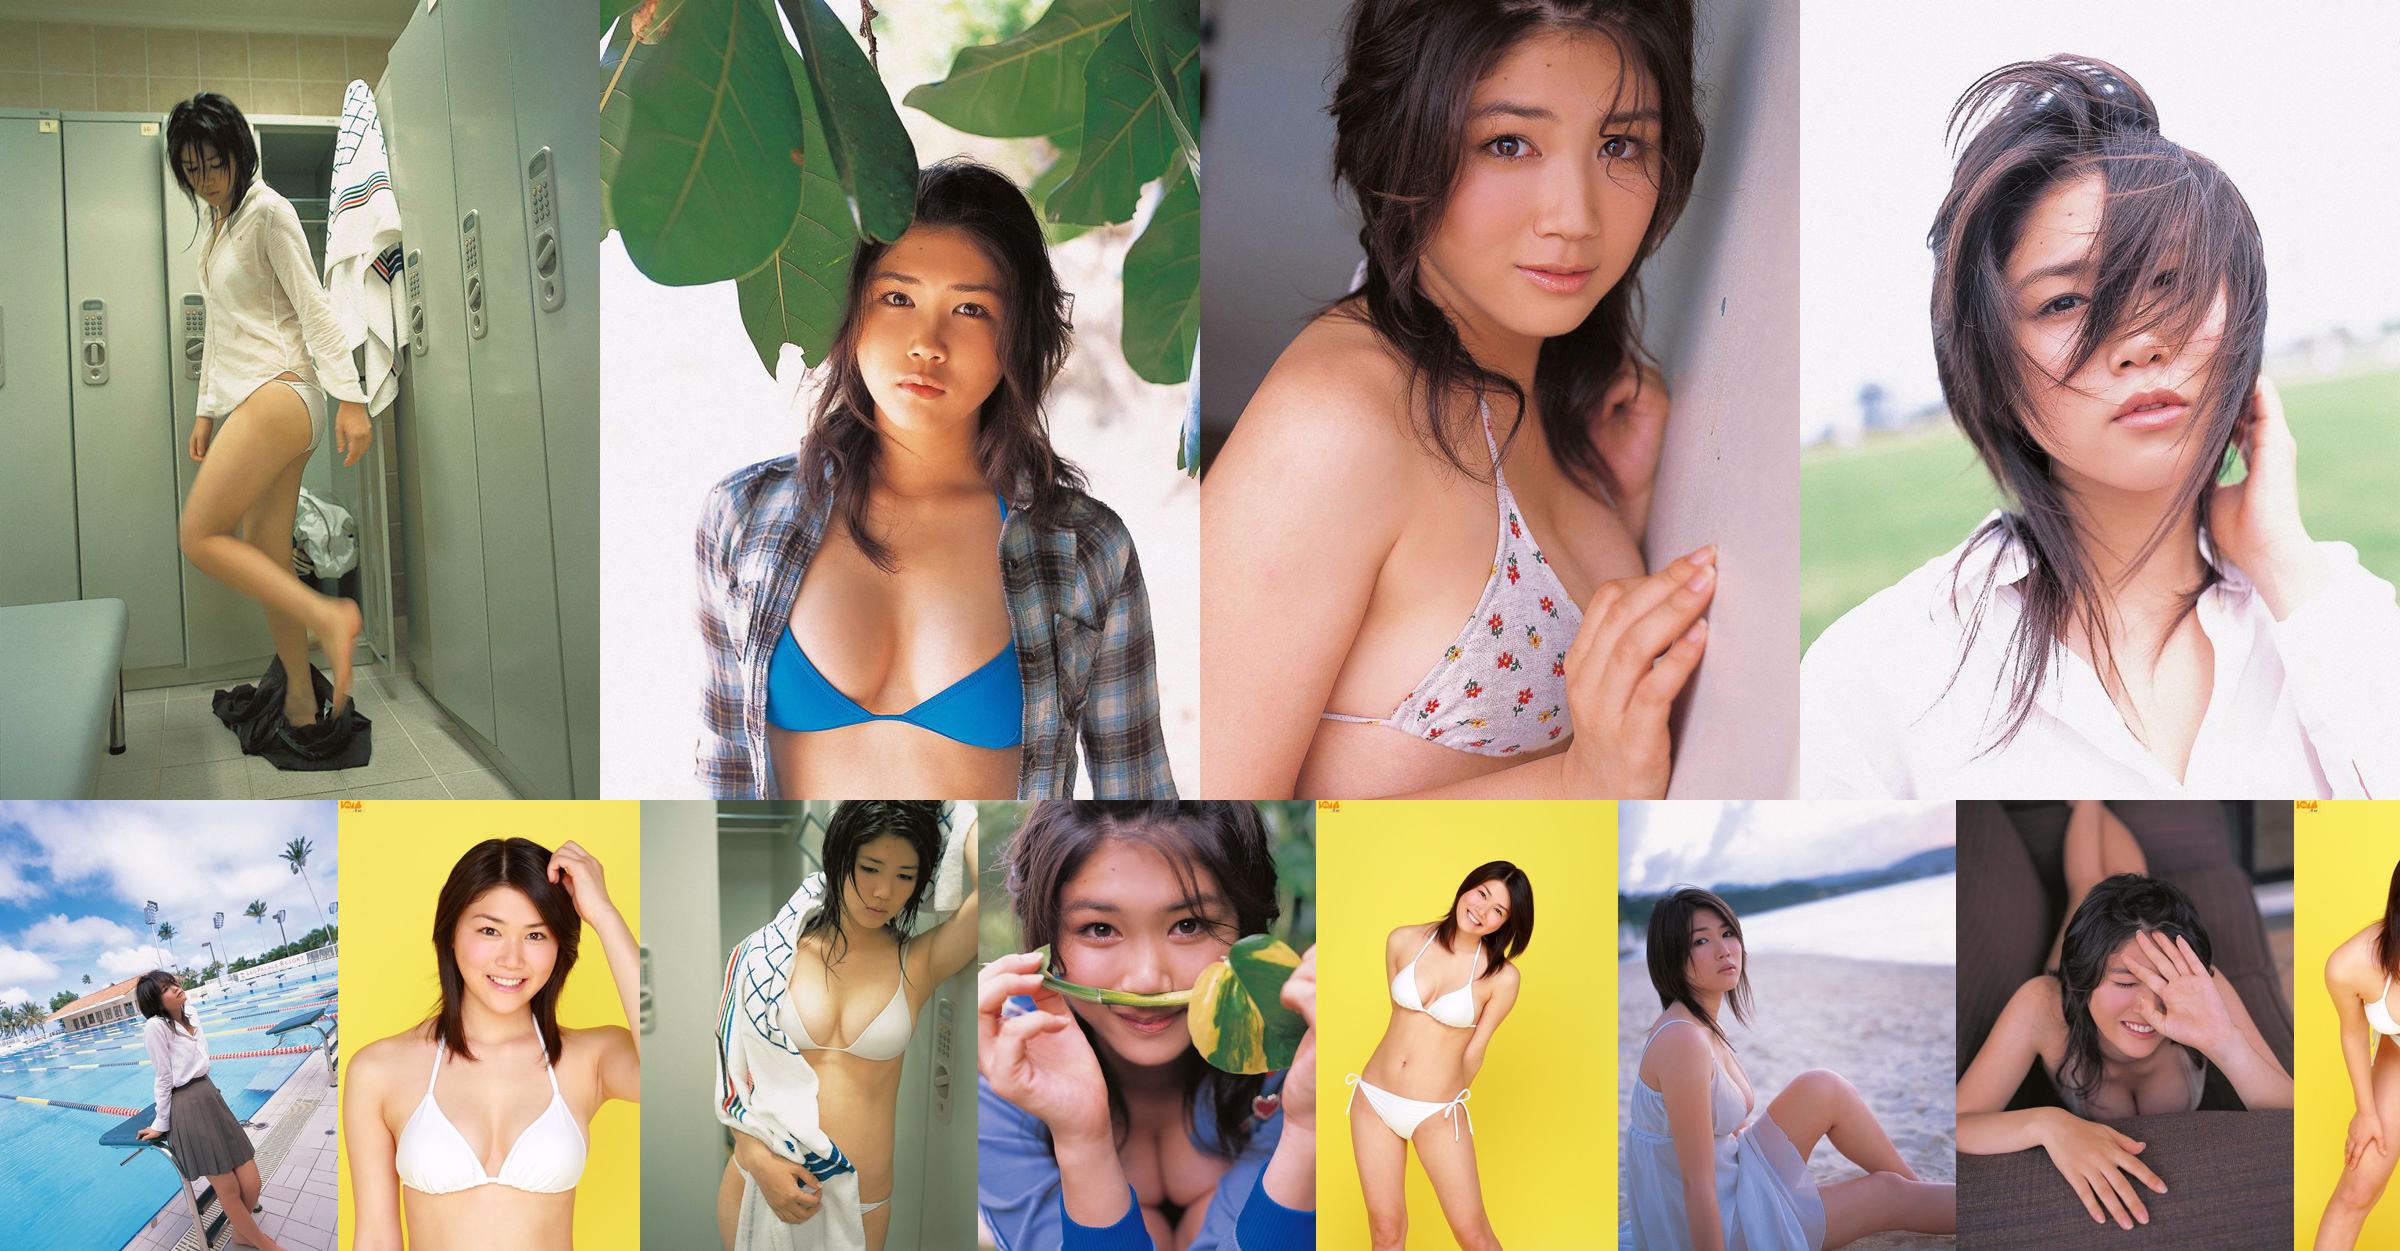 [Bomb.TV] Edisi Agustus 2006 dari Mami Nagaoka Mami Nagaoka / Mami Nagaoka No.aec066 Halaman 1